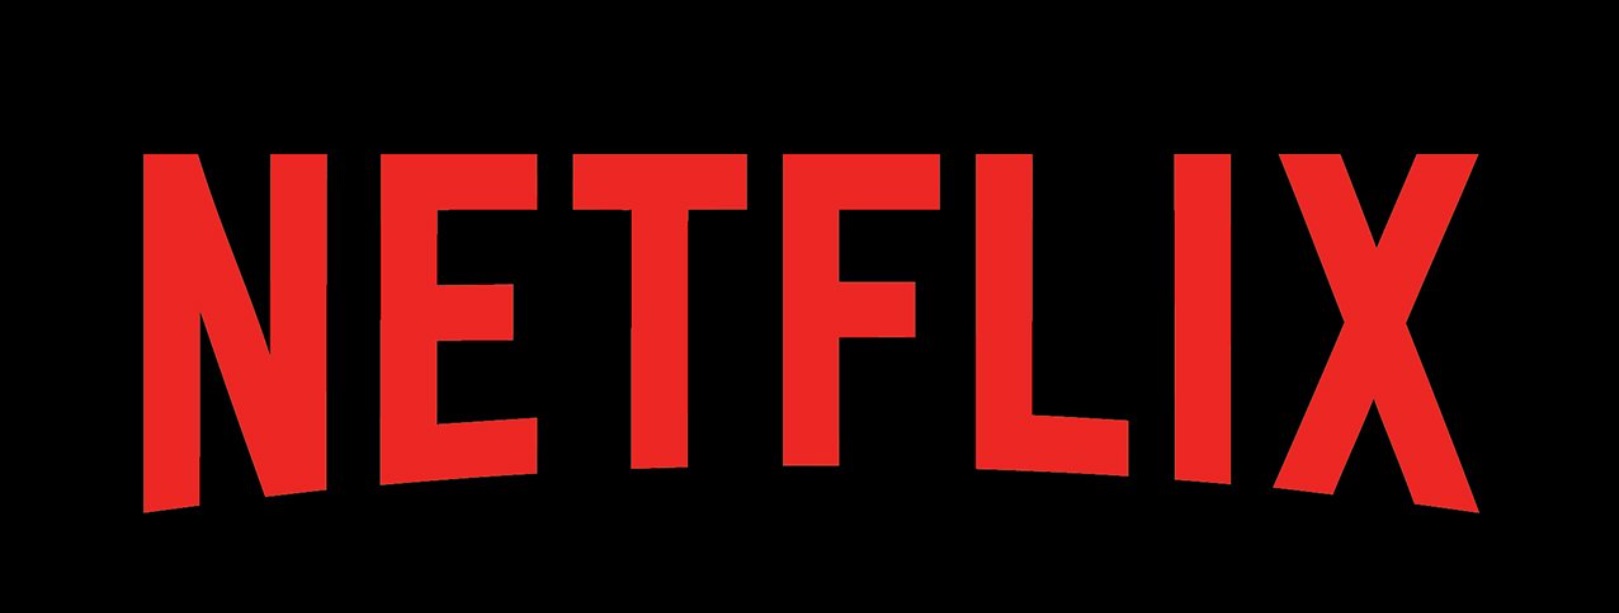 Tipos de logos: ejemplo de logotipo de Netflix